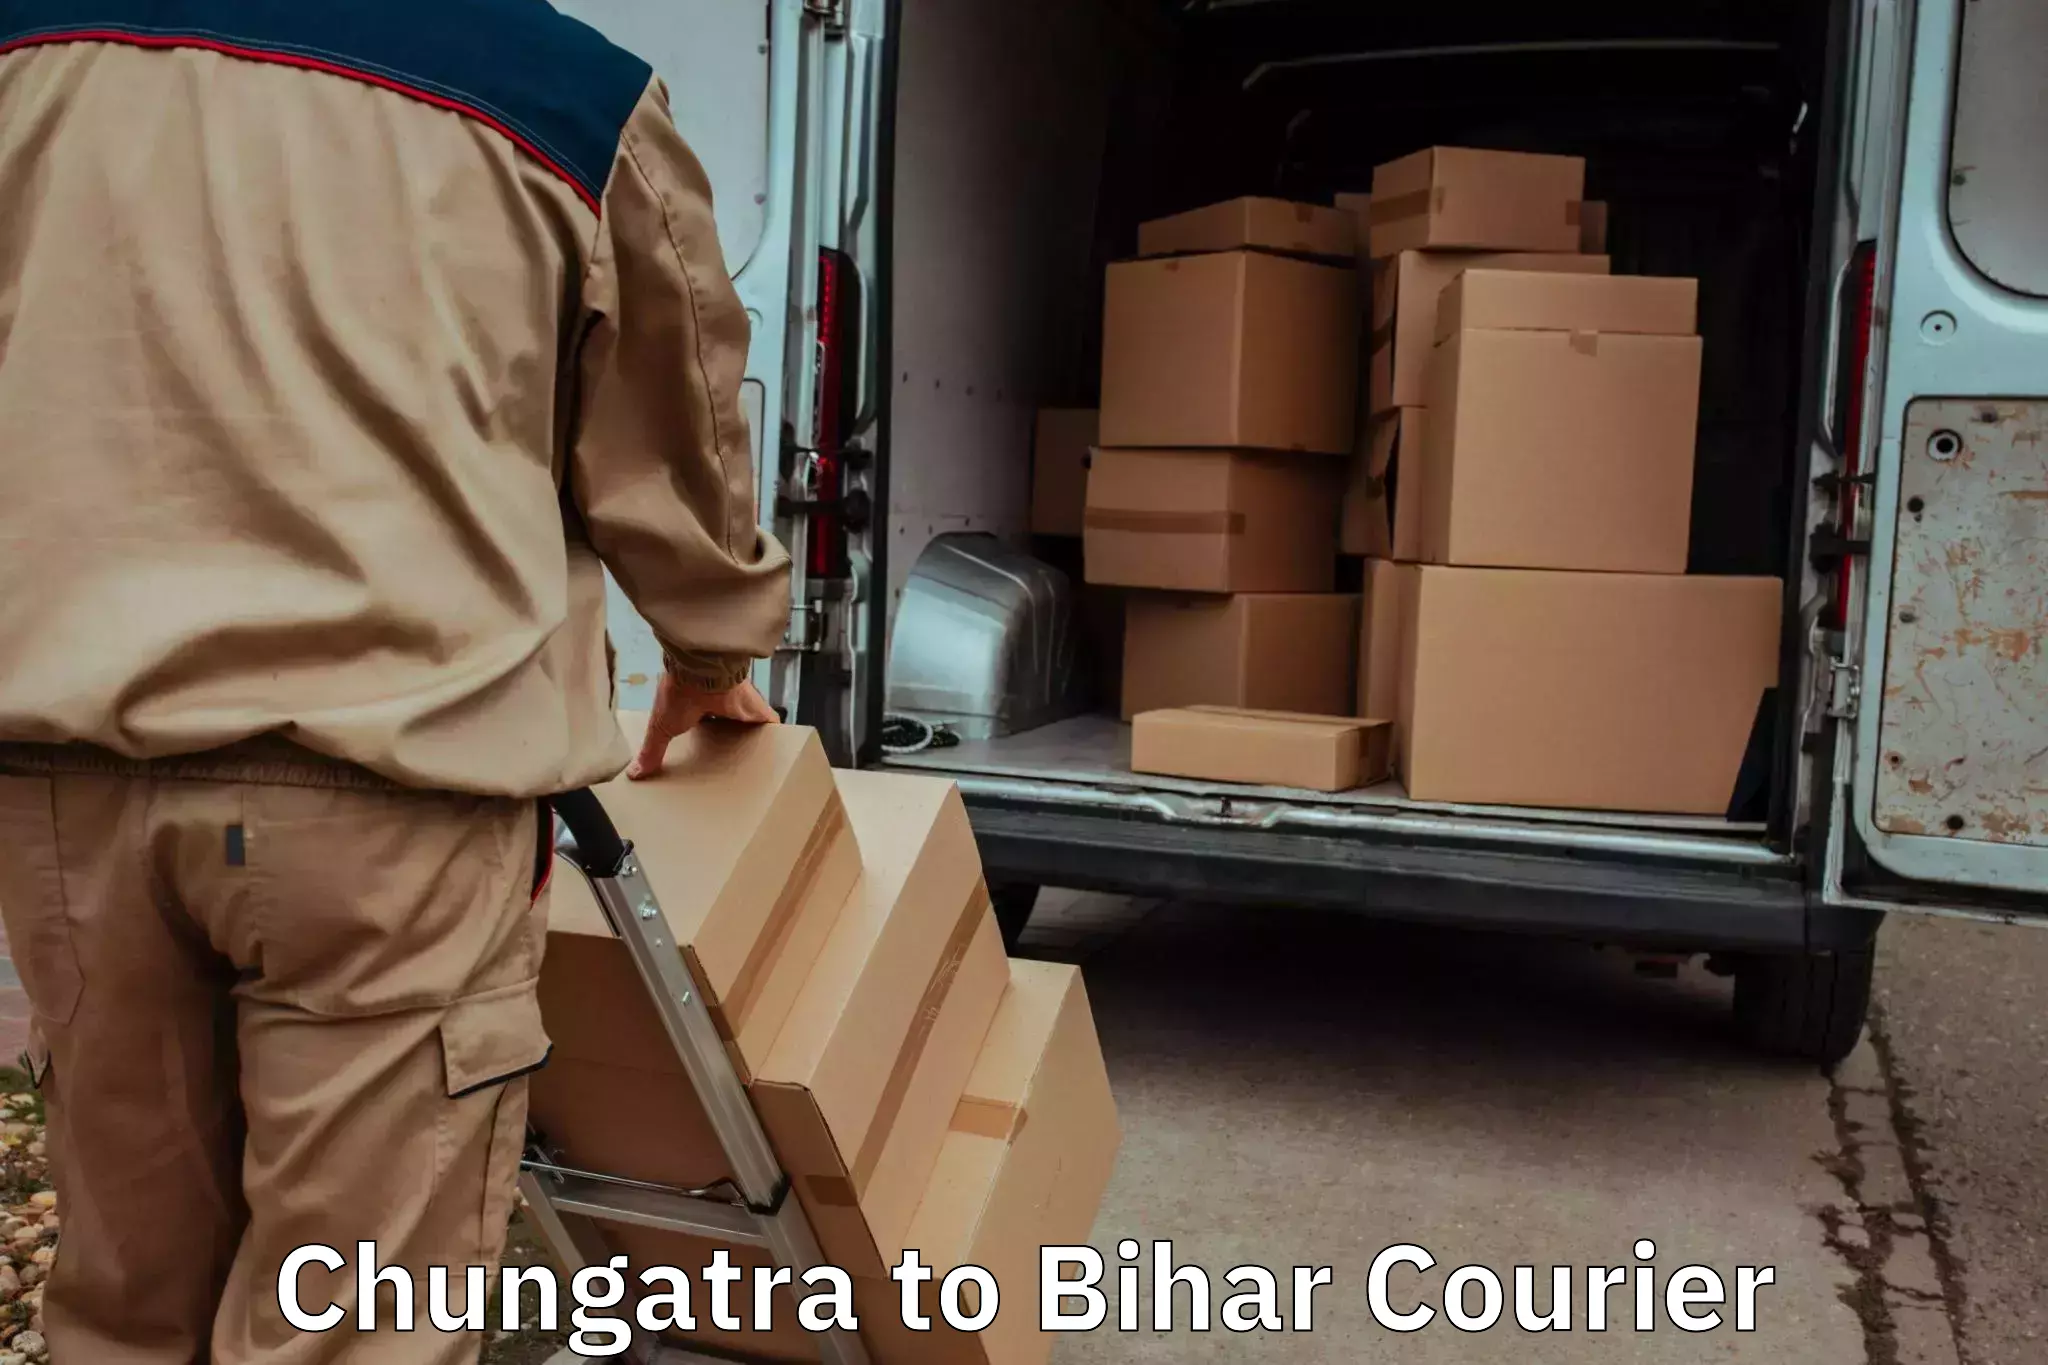 Furniture transport and storage Chungatra to Biraul